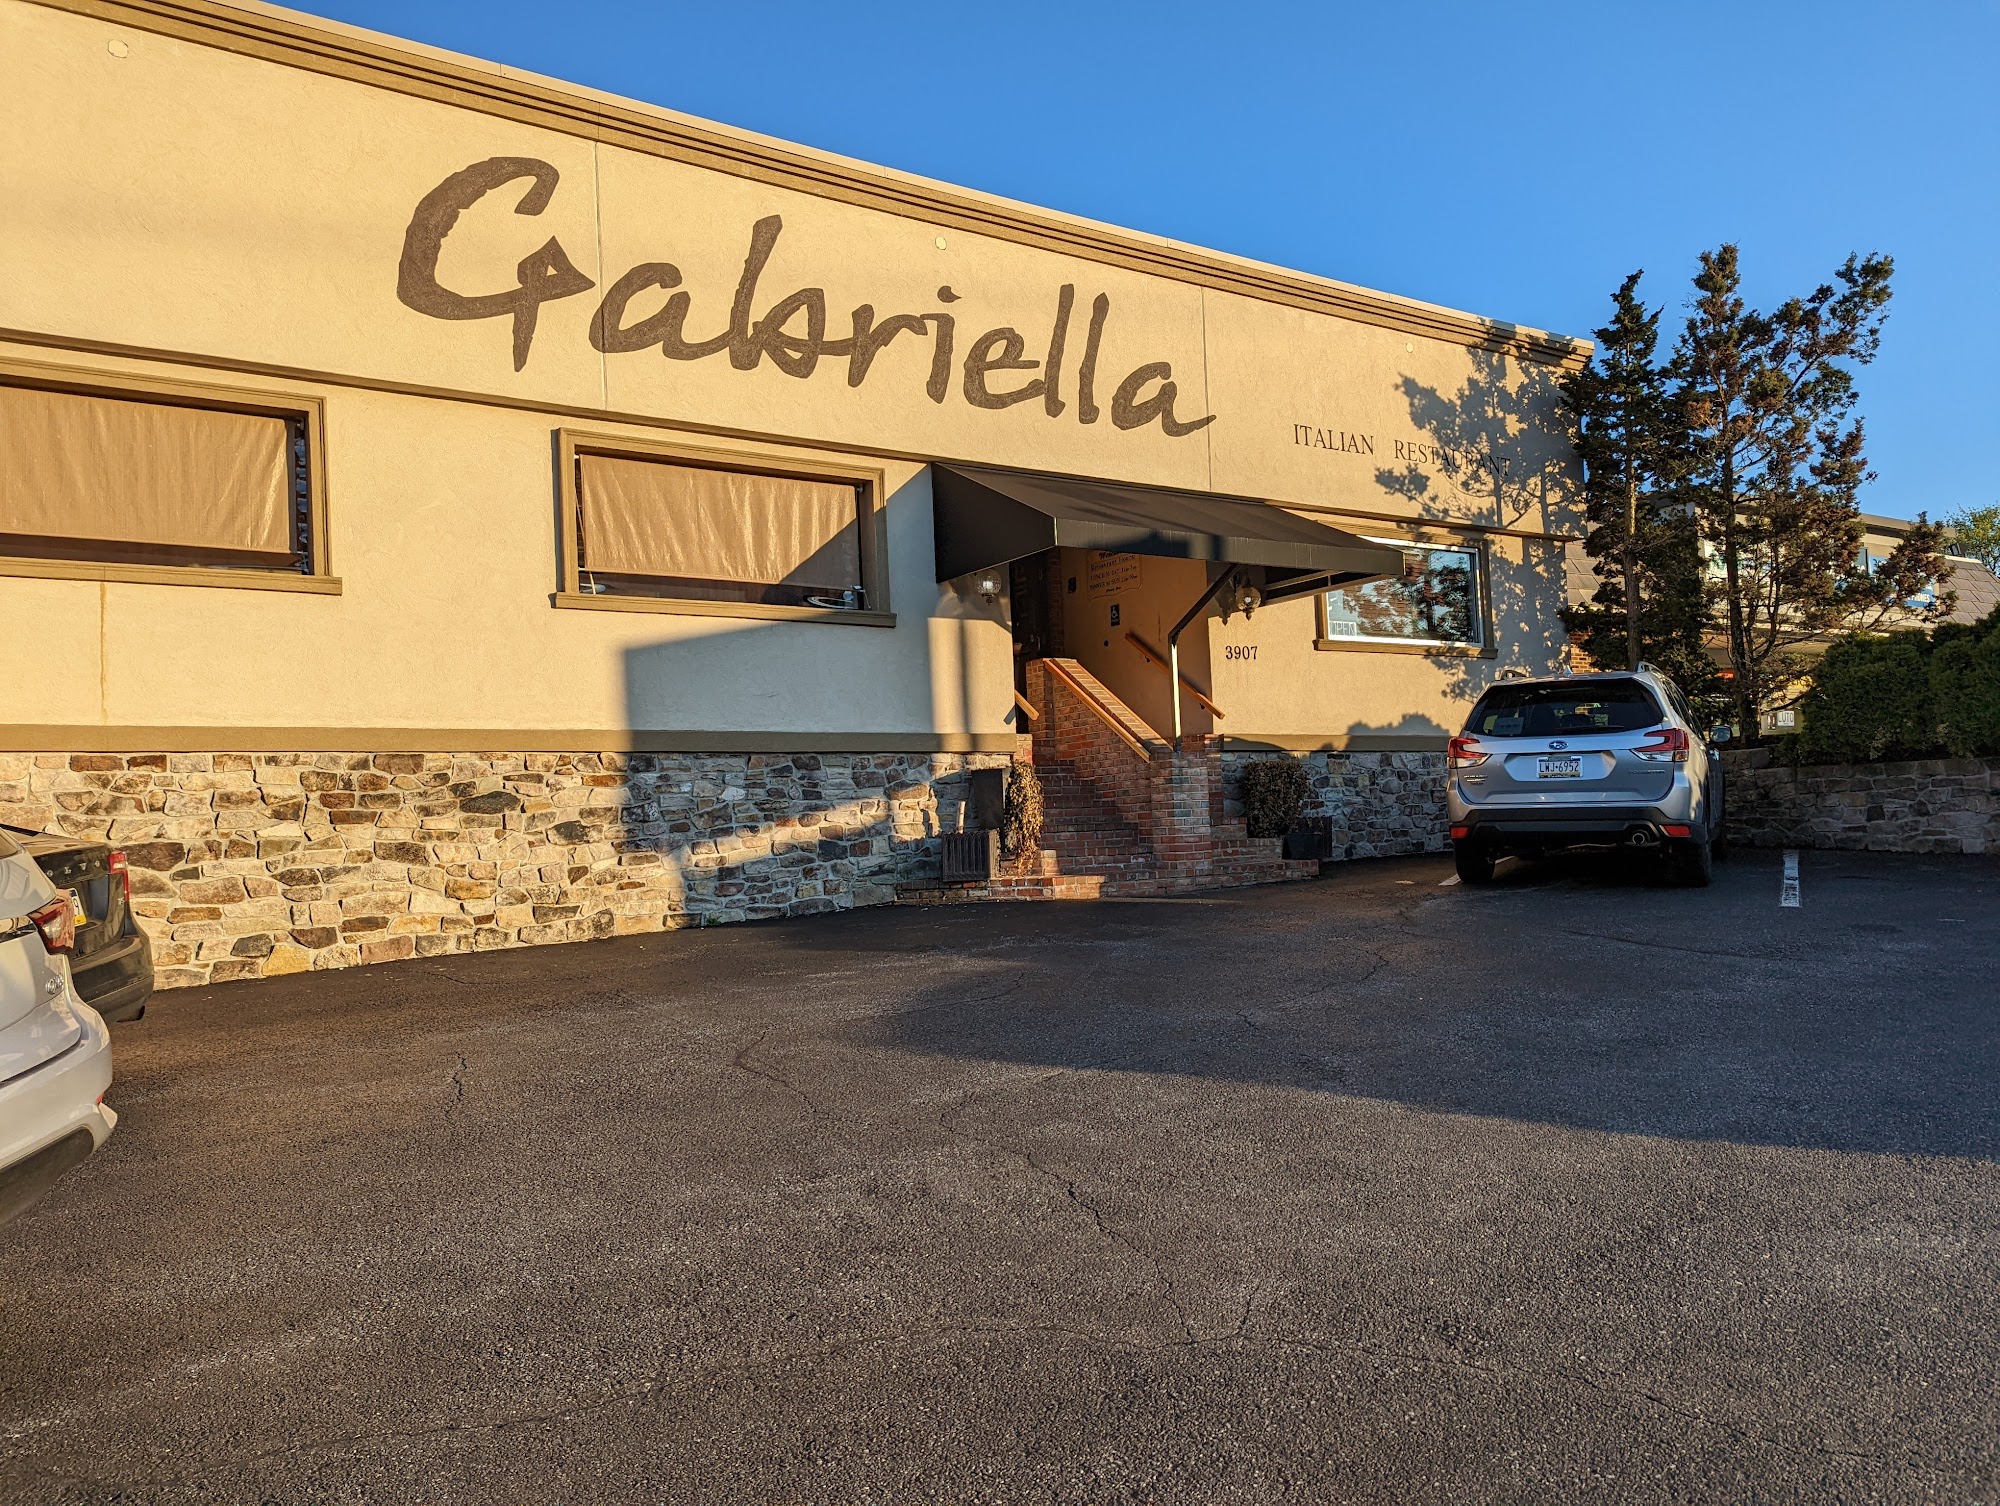 Gabriella Italian Restaurant